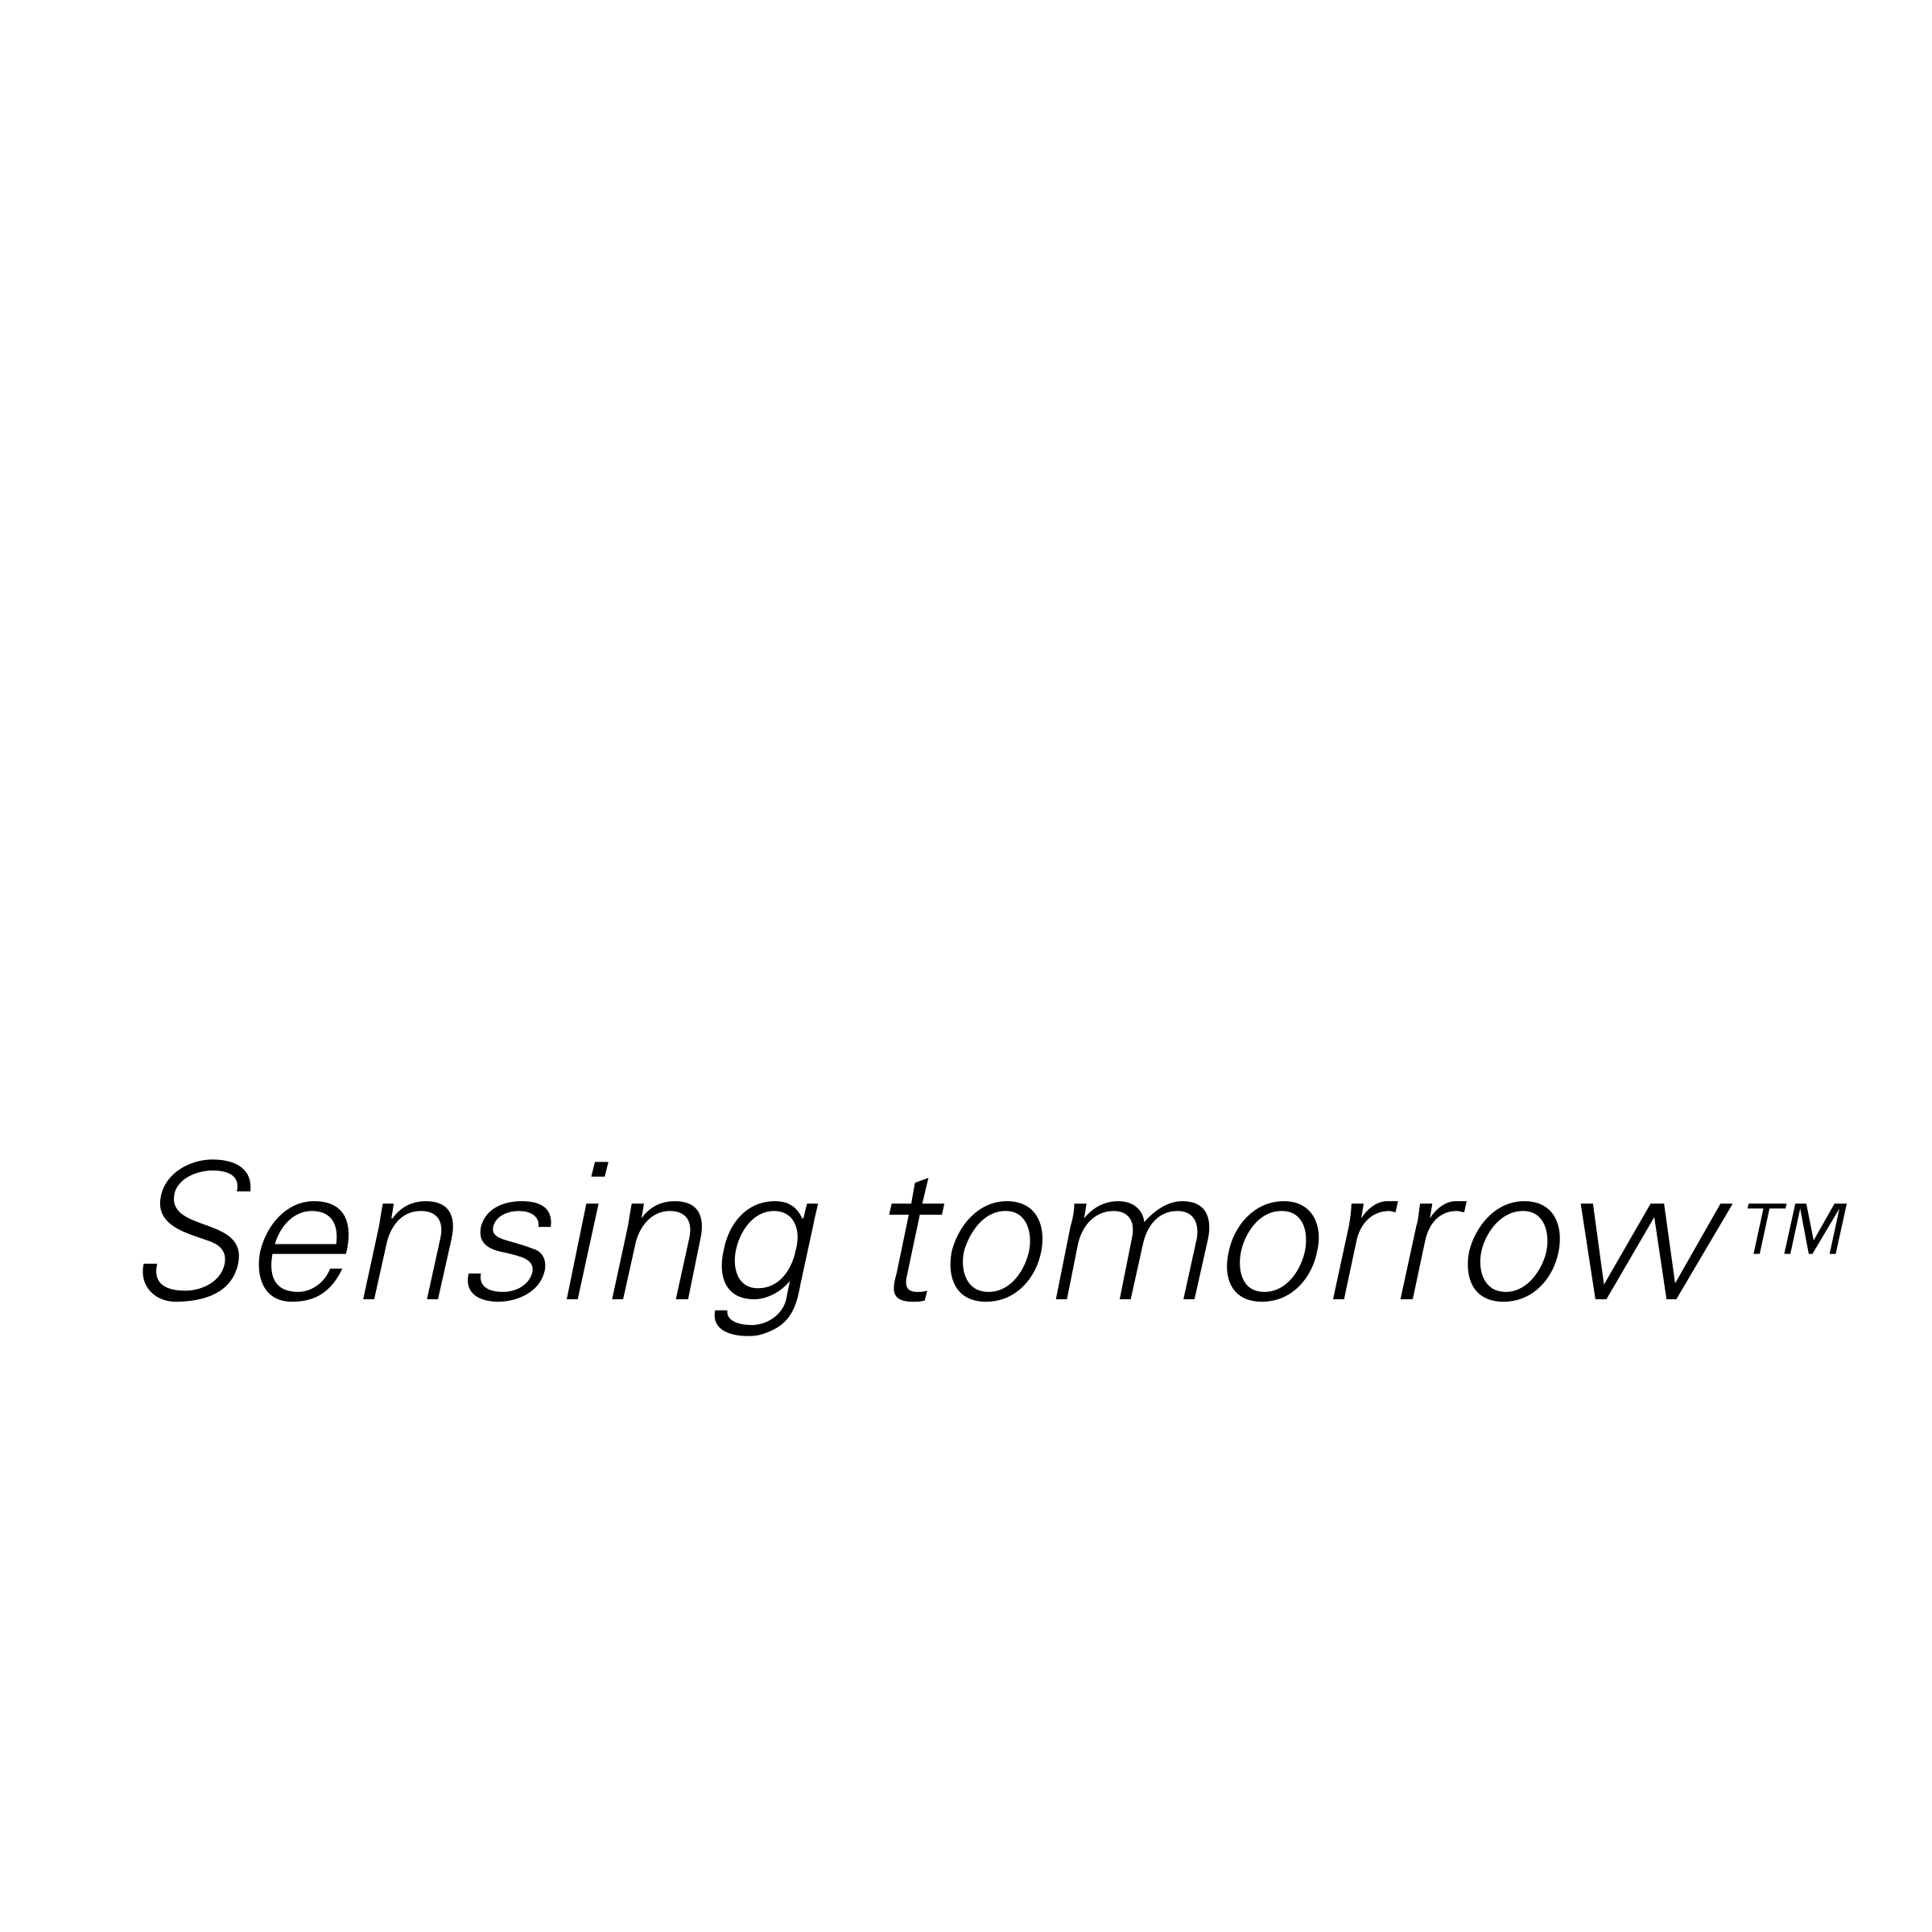 Omron Logo - Omron Logo PNG Transparent & SVG Vector - Freebie Supply